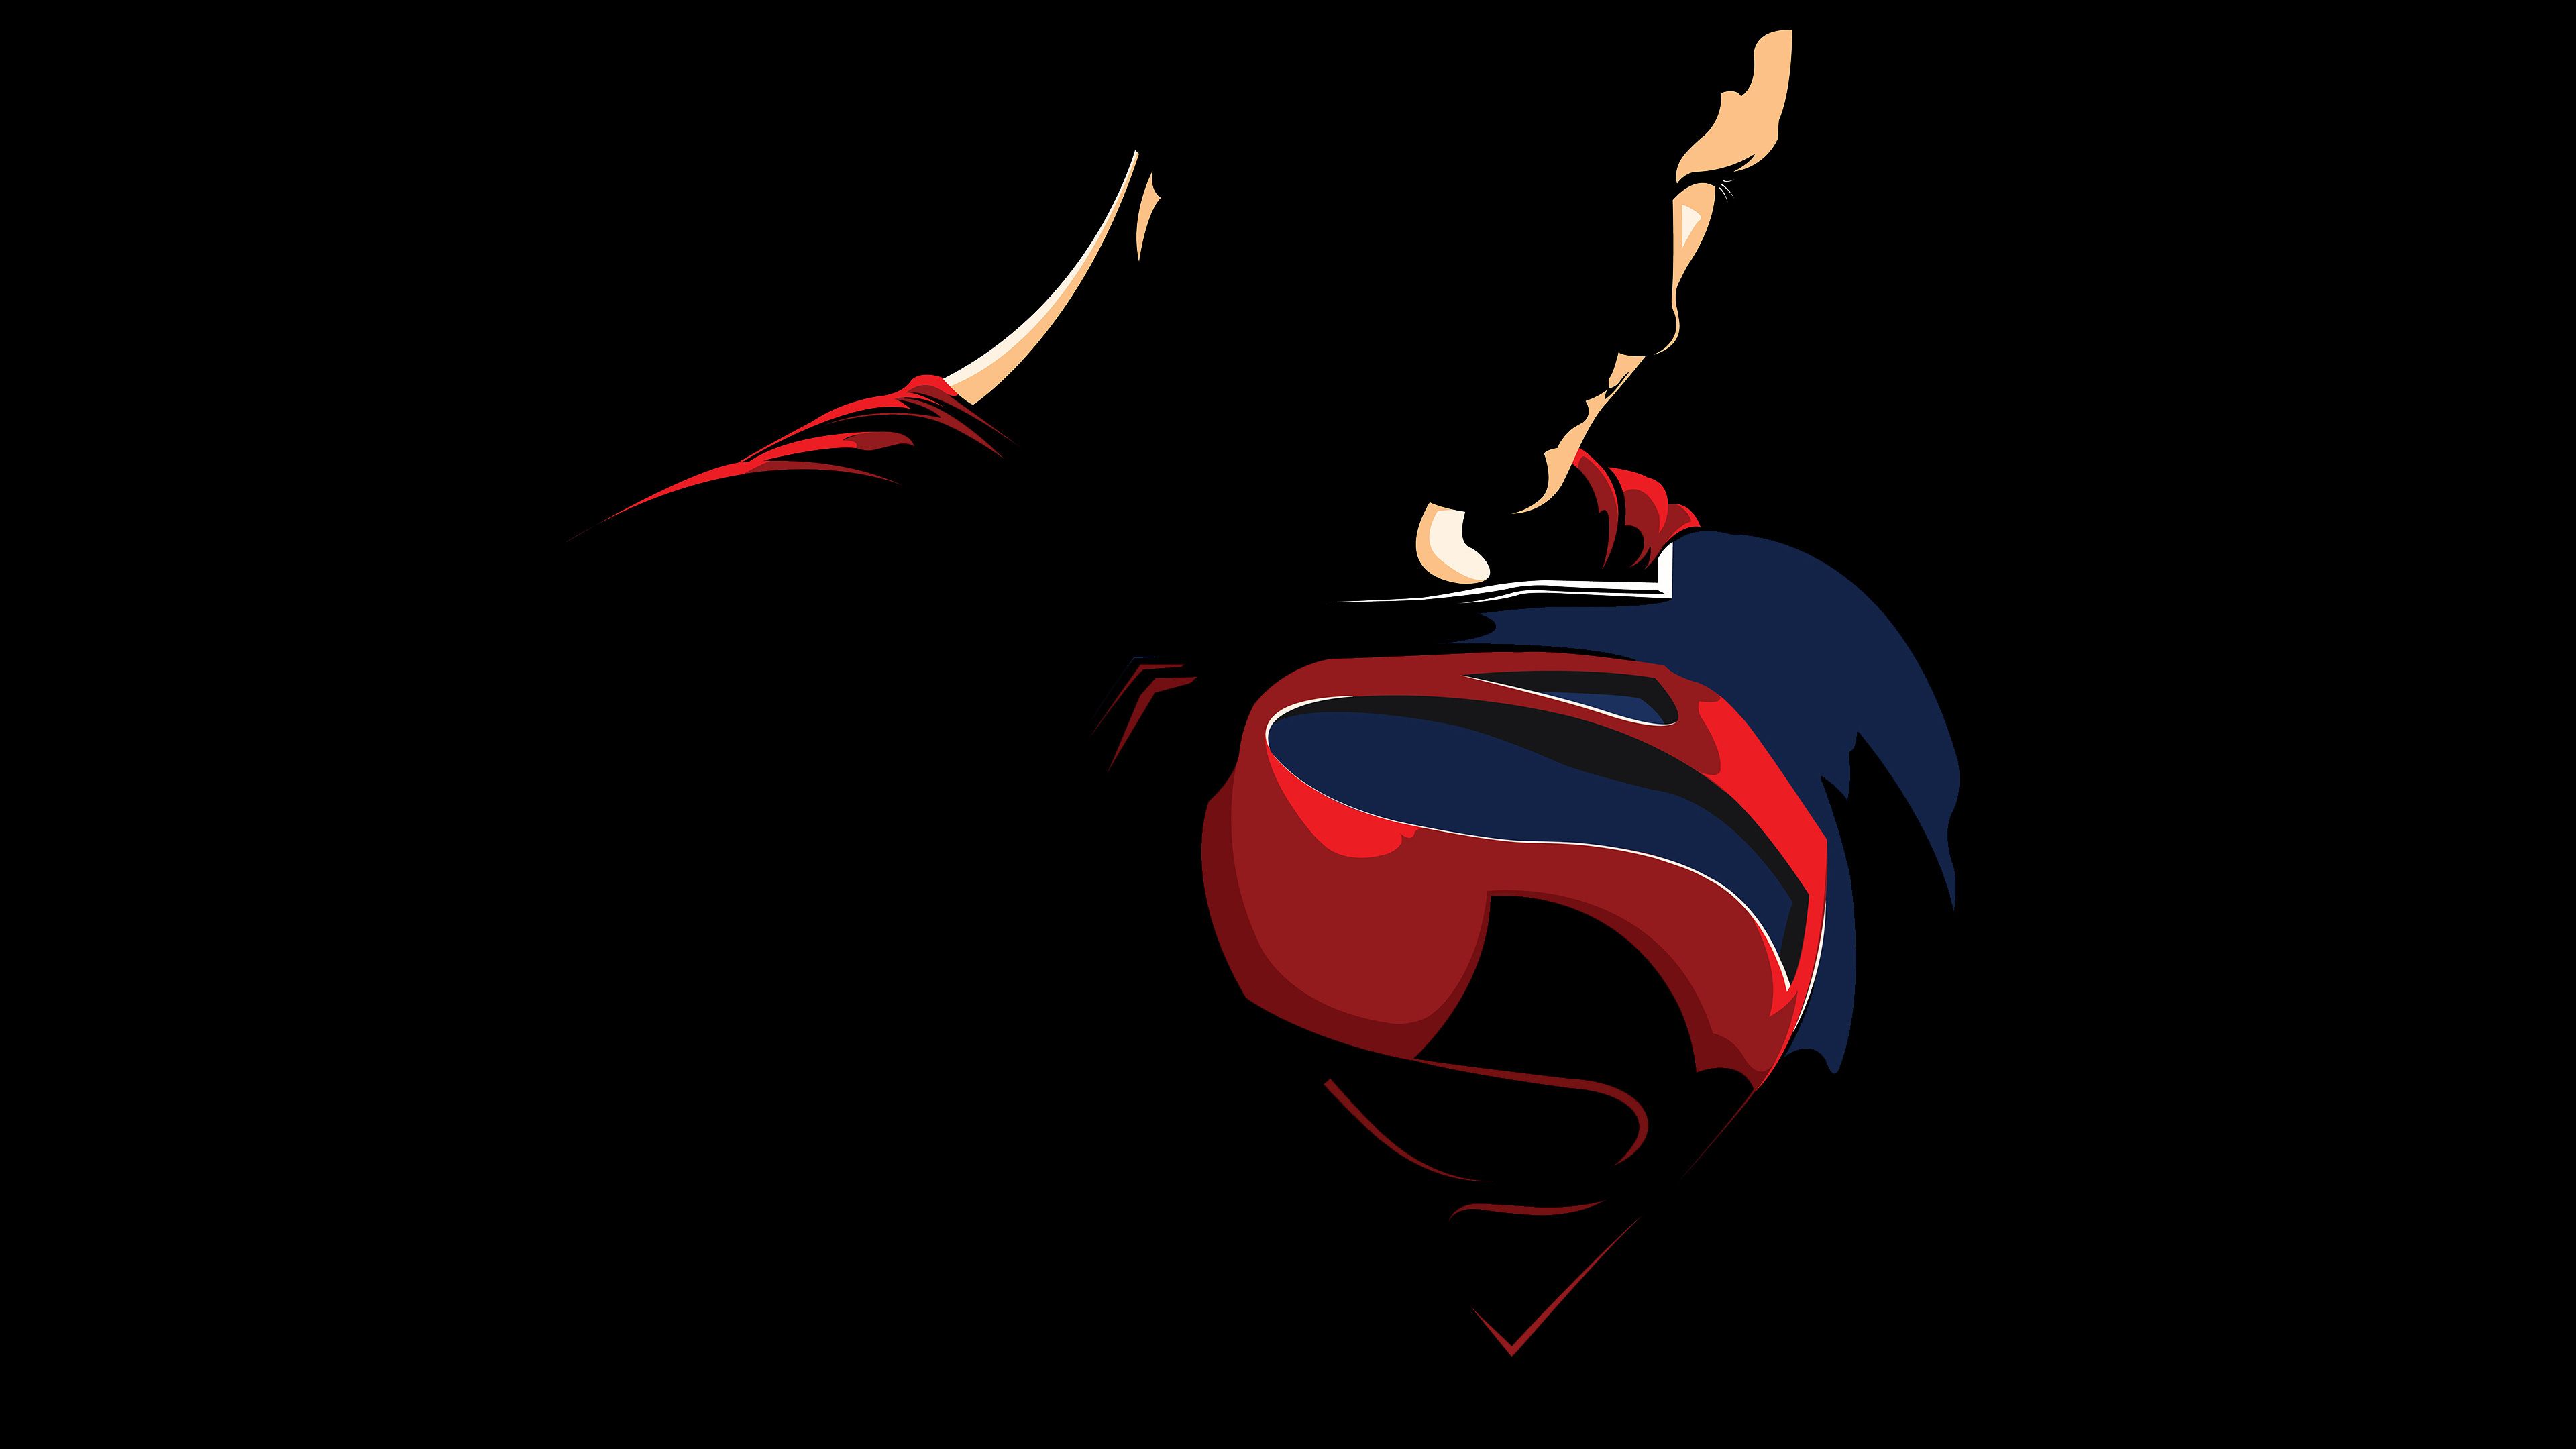 Superman Minimalism Logo 4k, HD Superheroes, 4k Wallpaper, Image, Background, Photo and Picture